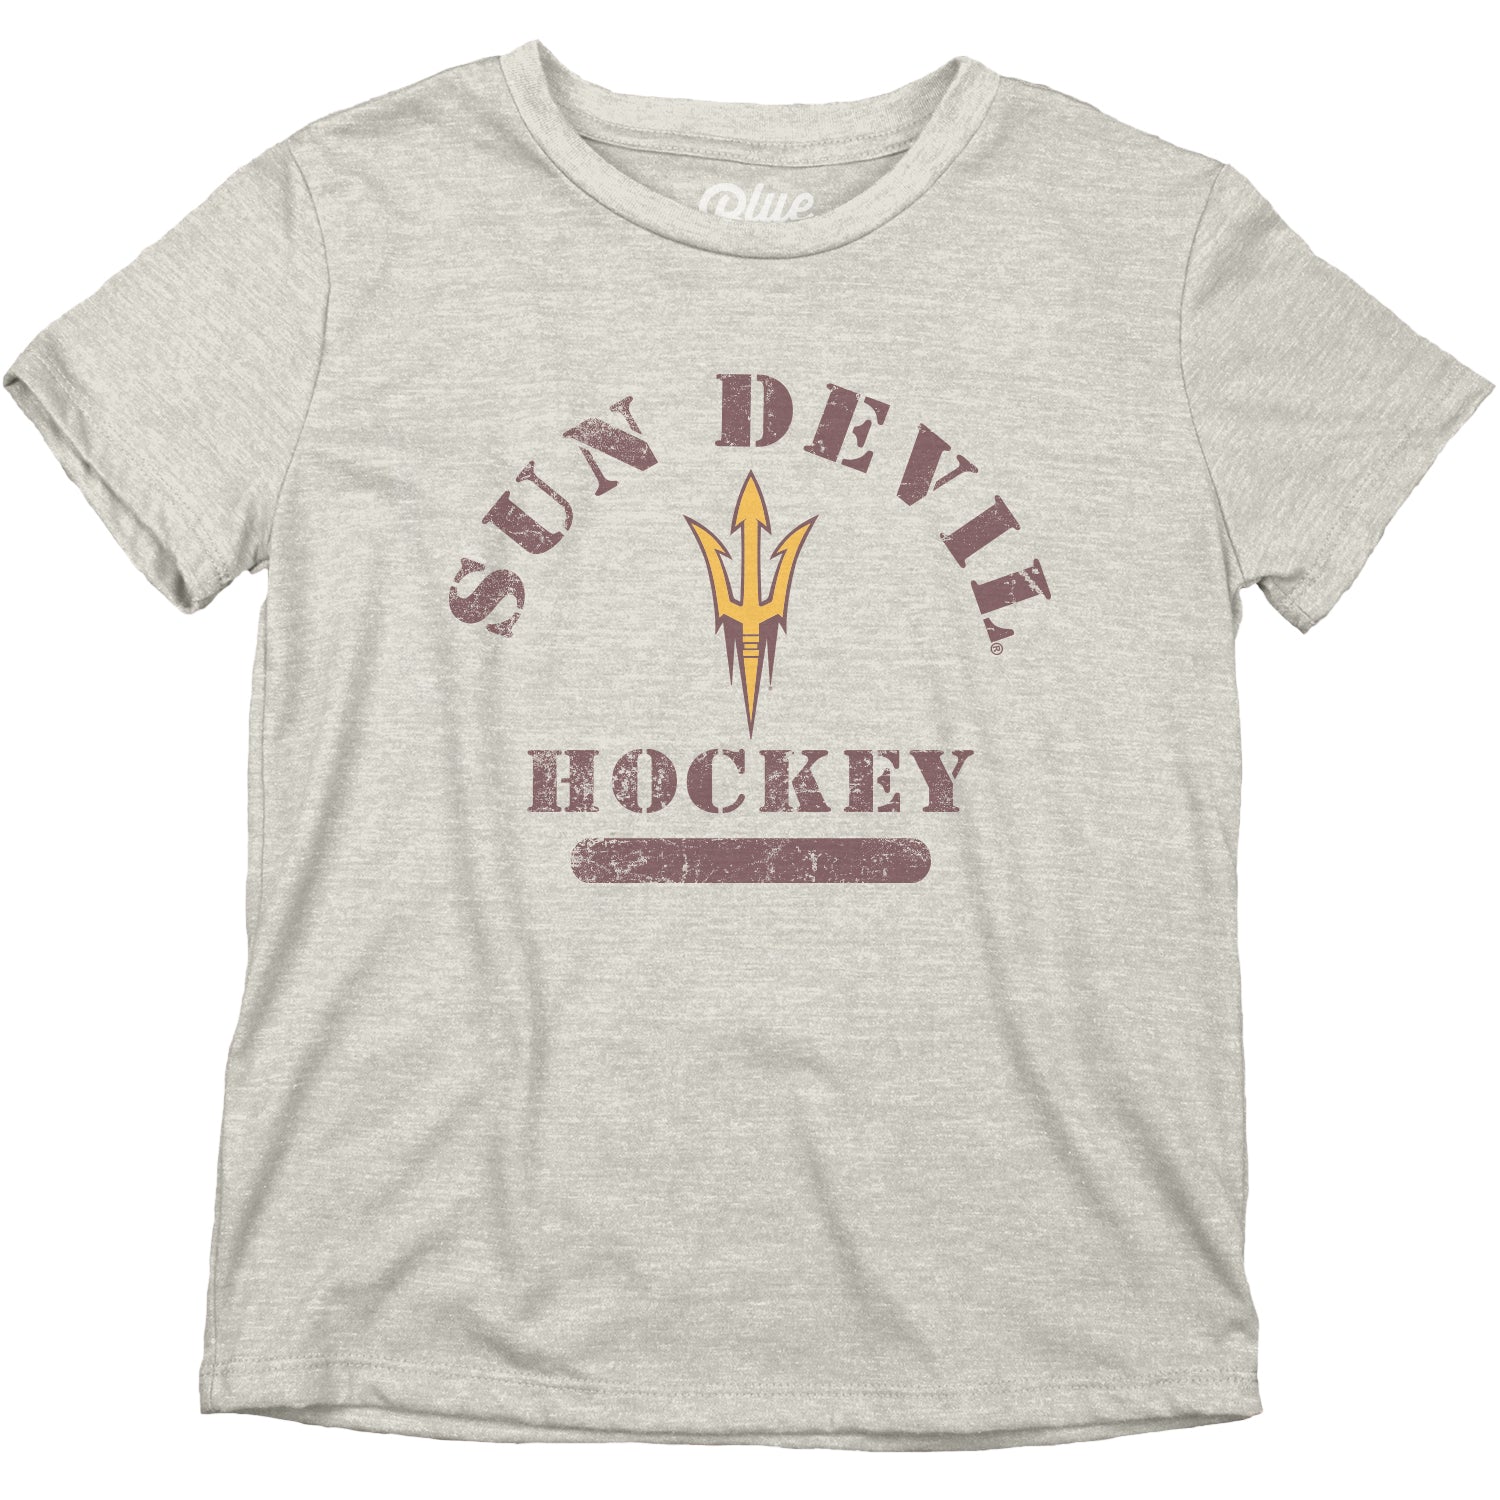 Colosseum, Shirts, Arizona State Sun Devils Hockey Jersey